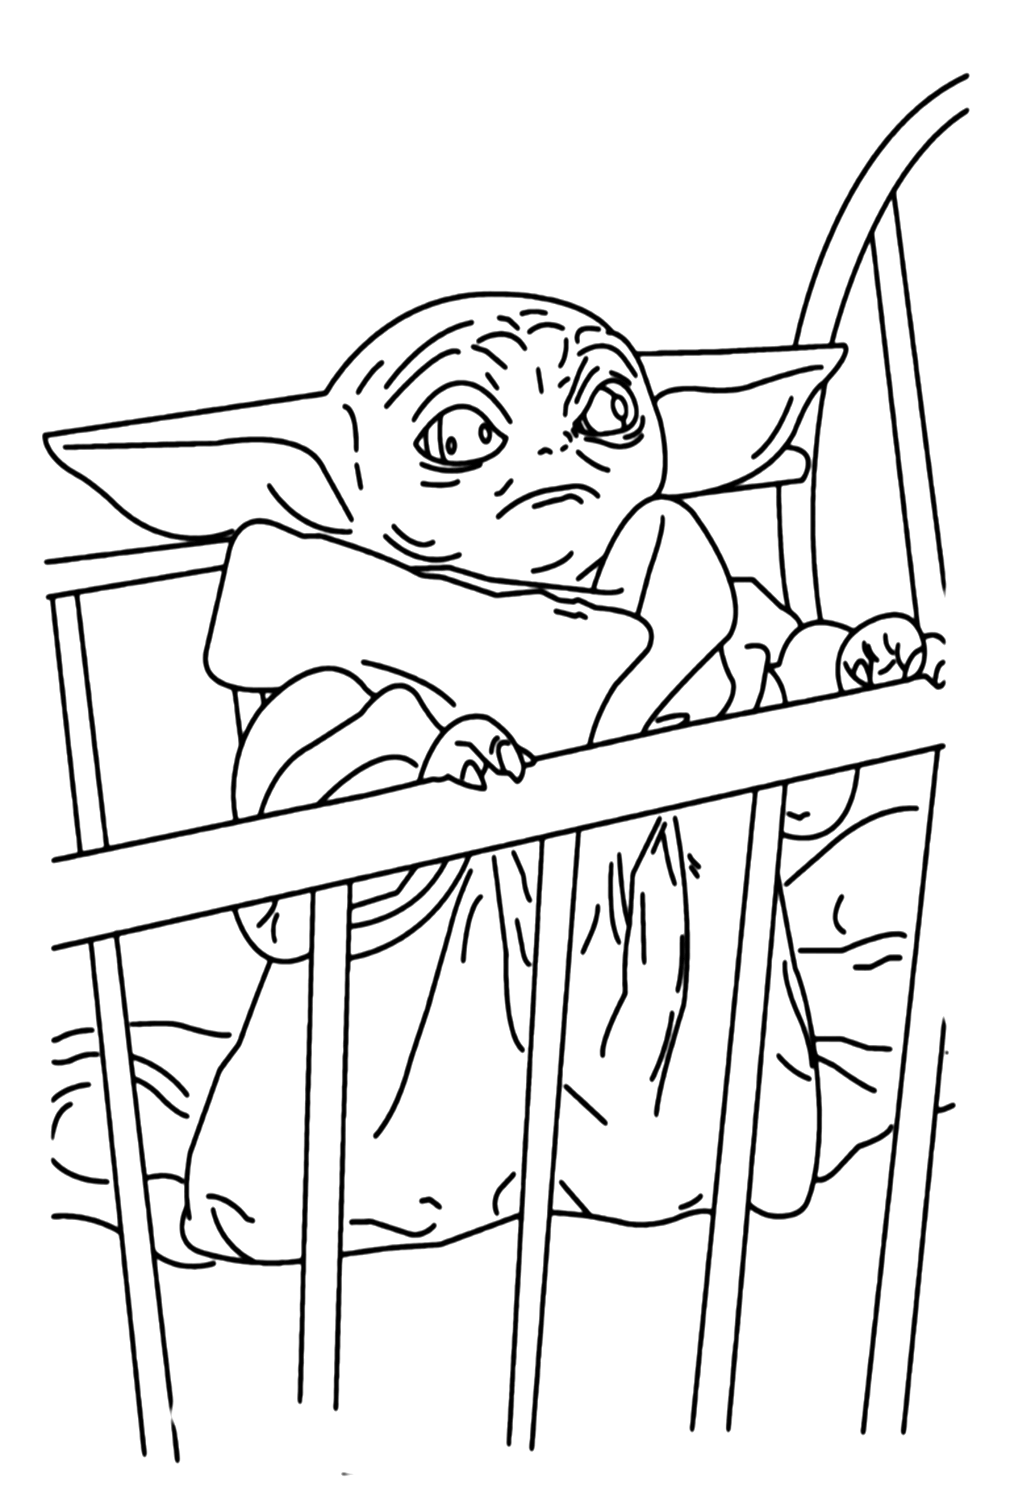 Baby Yoda in de wieg van Baby Yoda